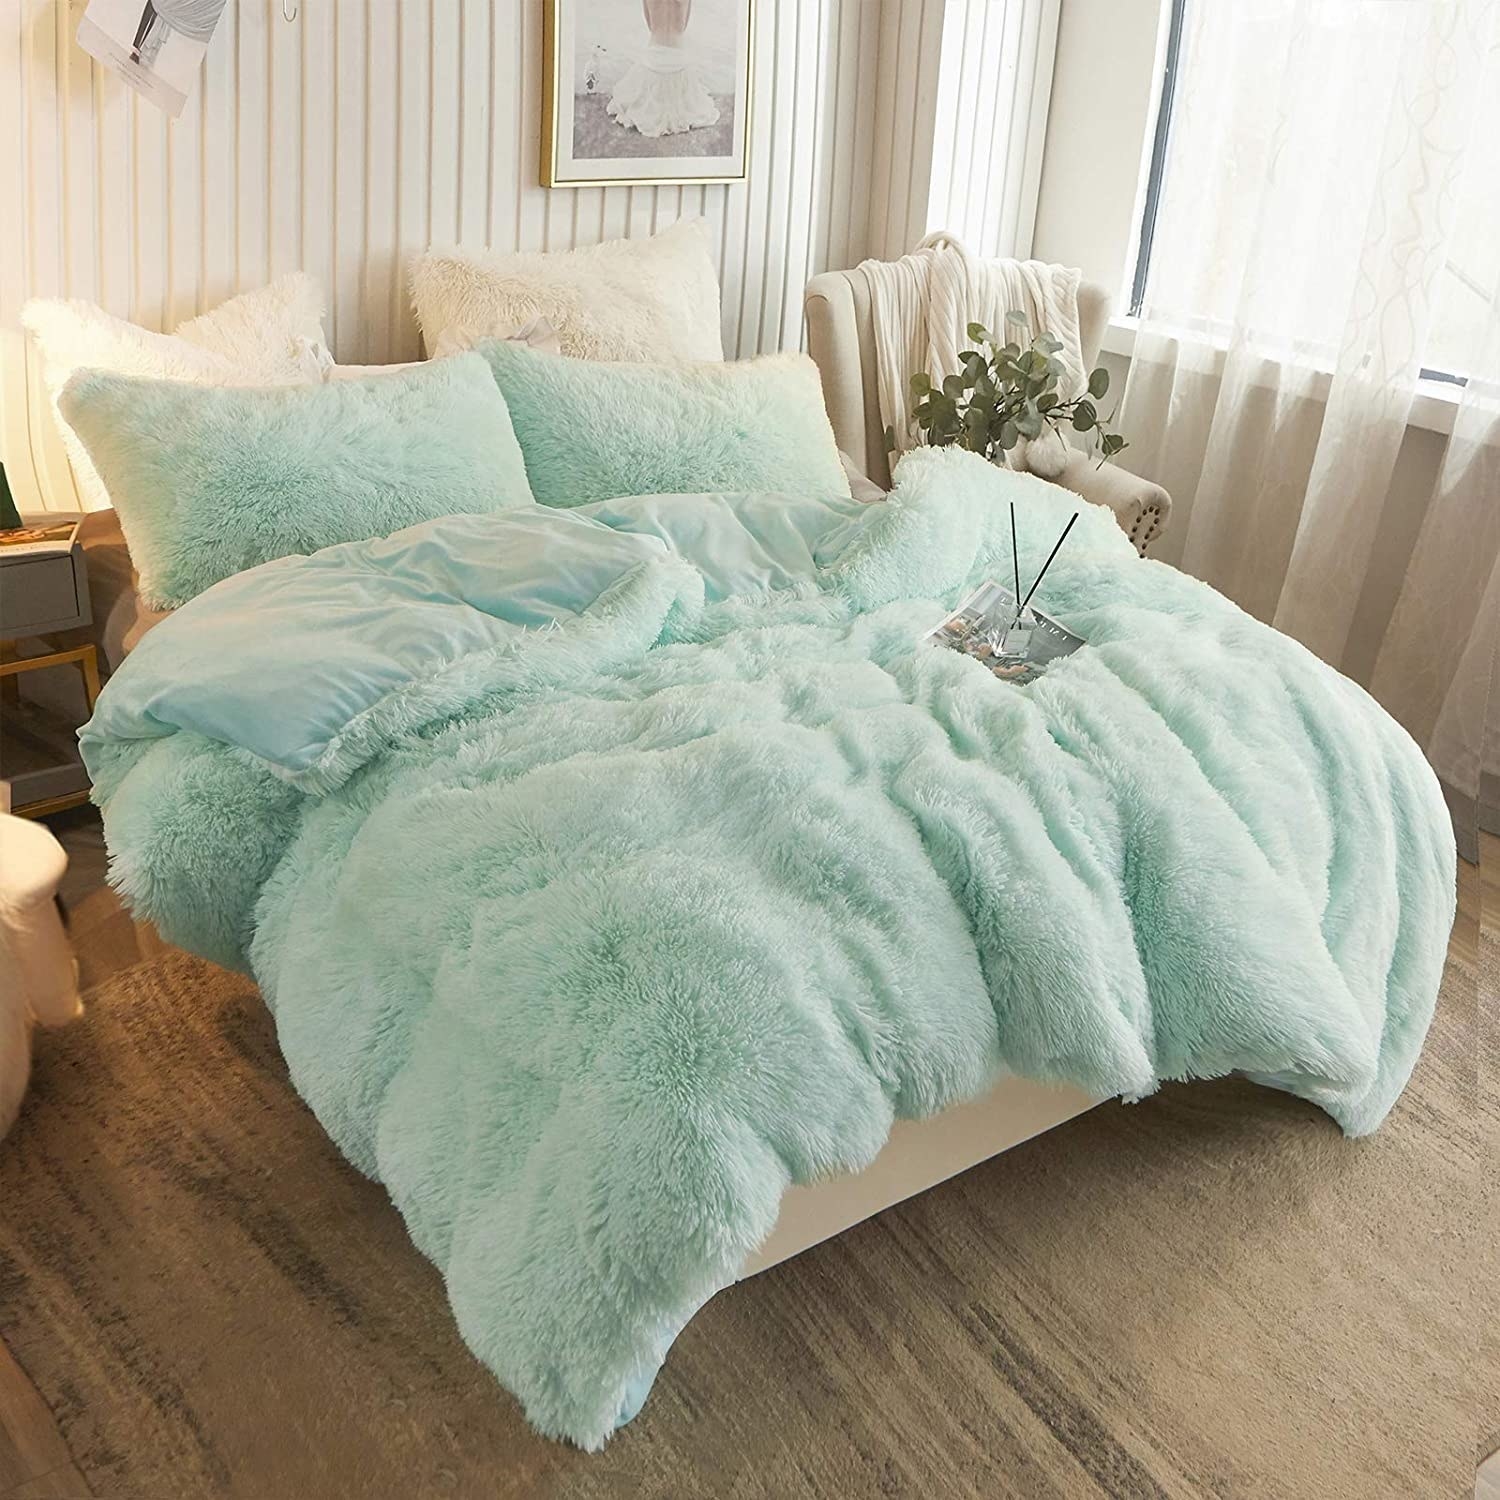 a fluffy duvet cover with matching pillow shams